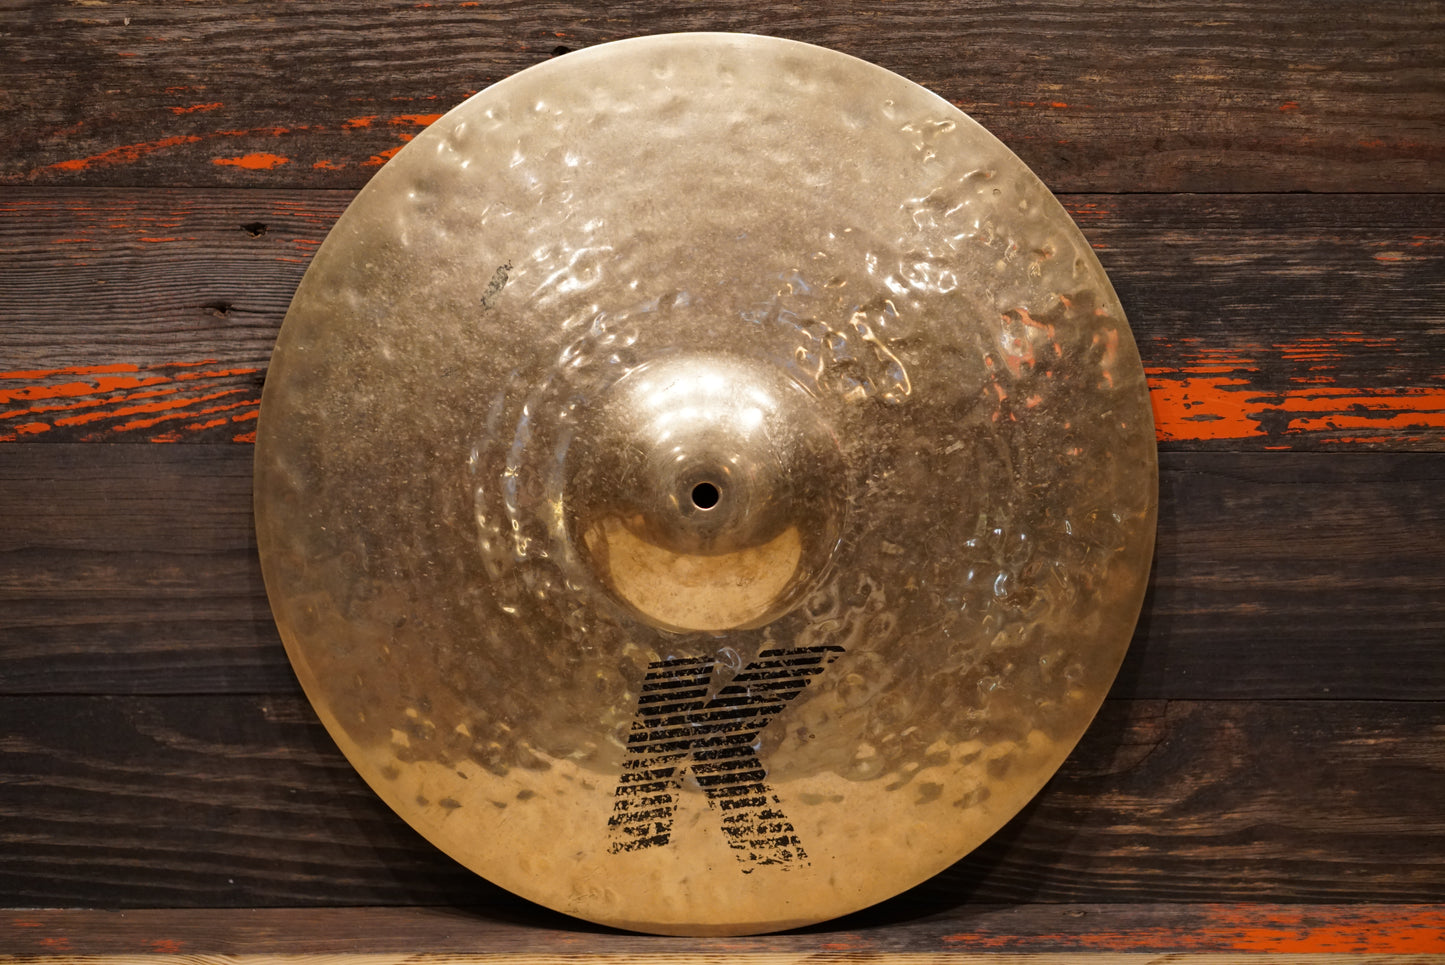 Zildjian 18" K. Custom Ride Cymbal (Peter Erskine Collection) - 1870g